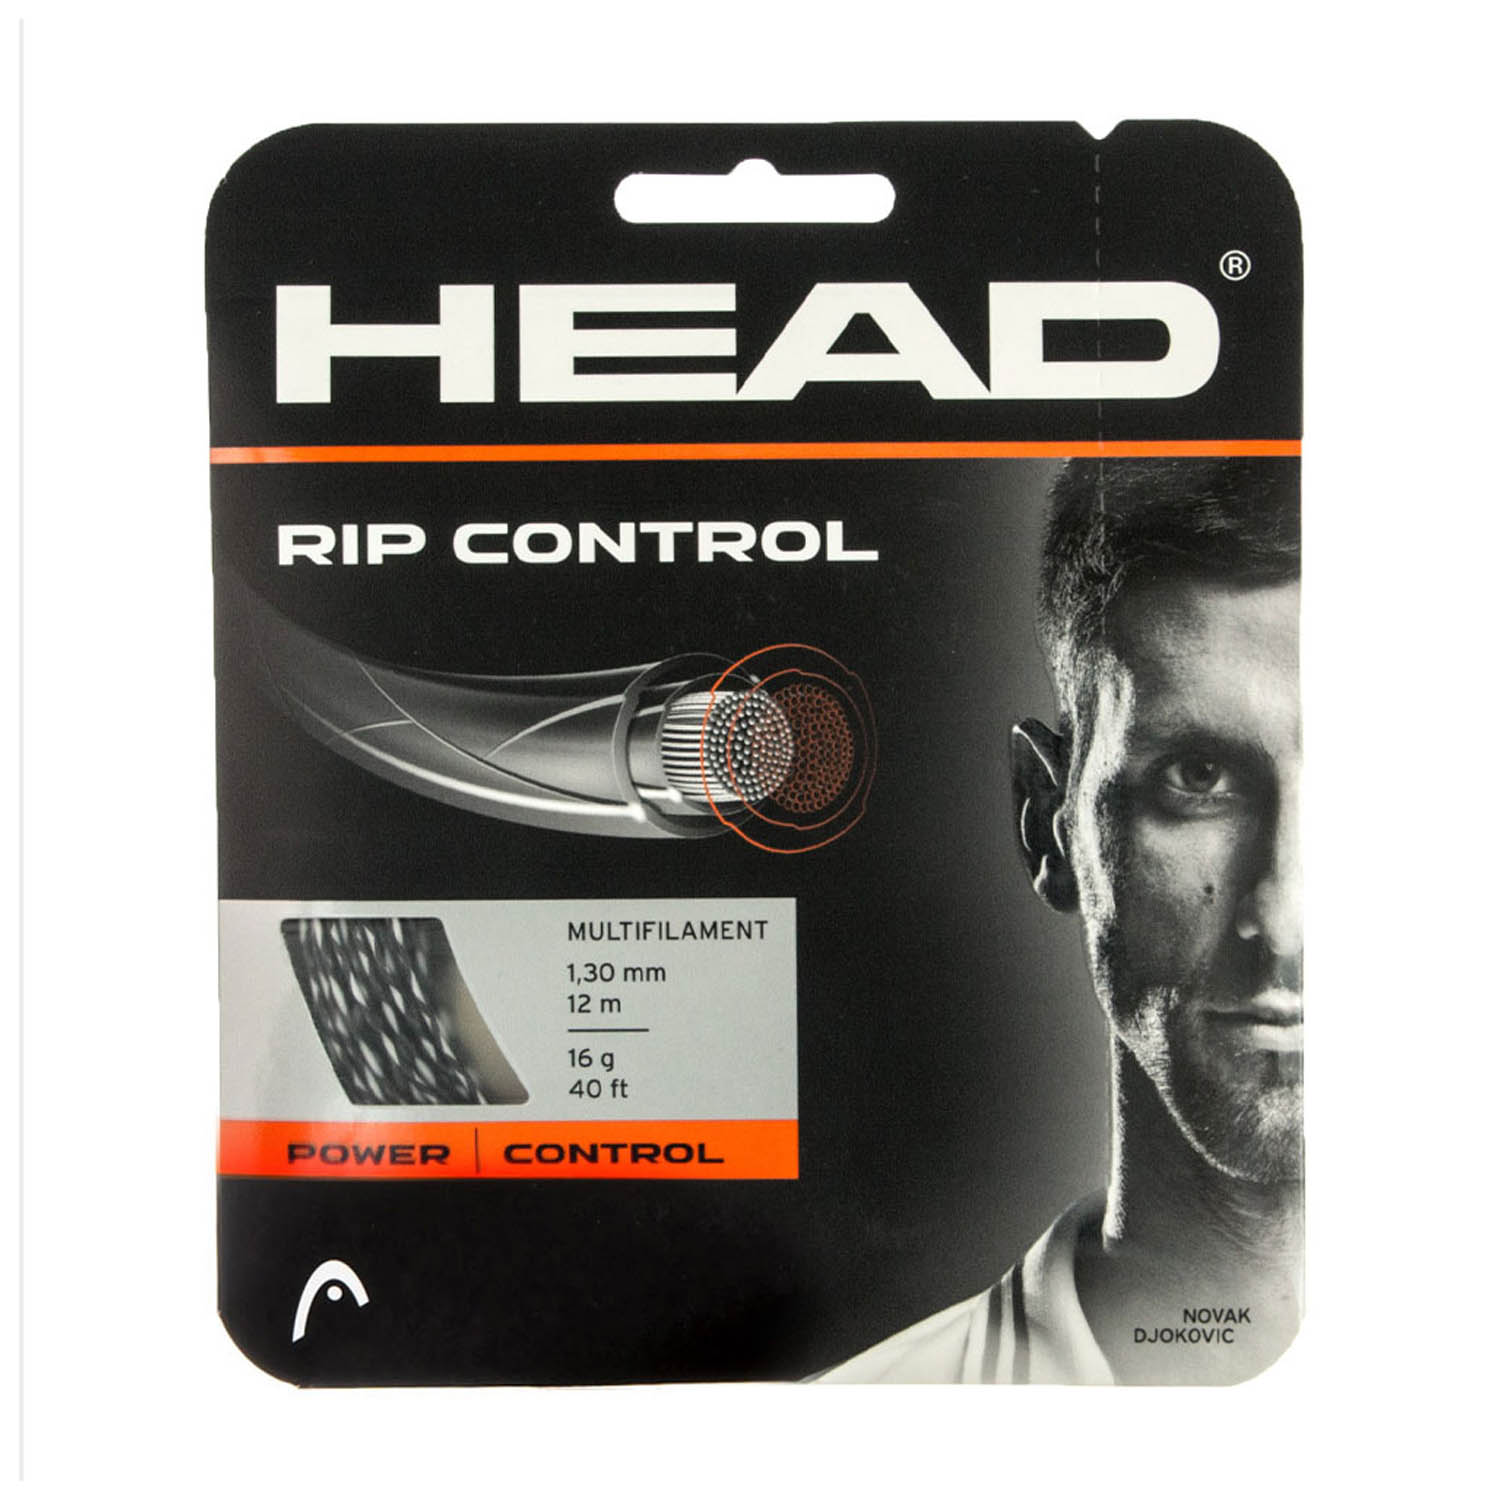 Head Rip Control 1.30 Set 12 m - Black/White